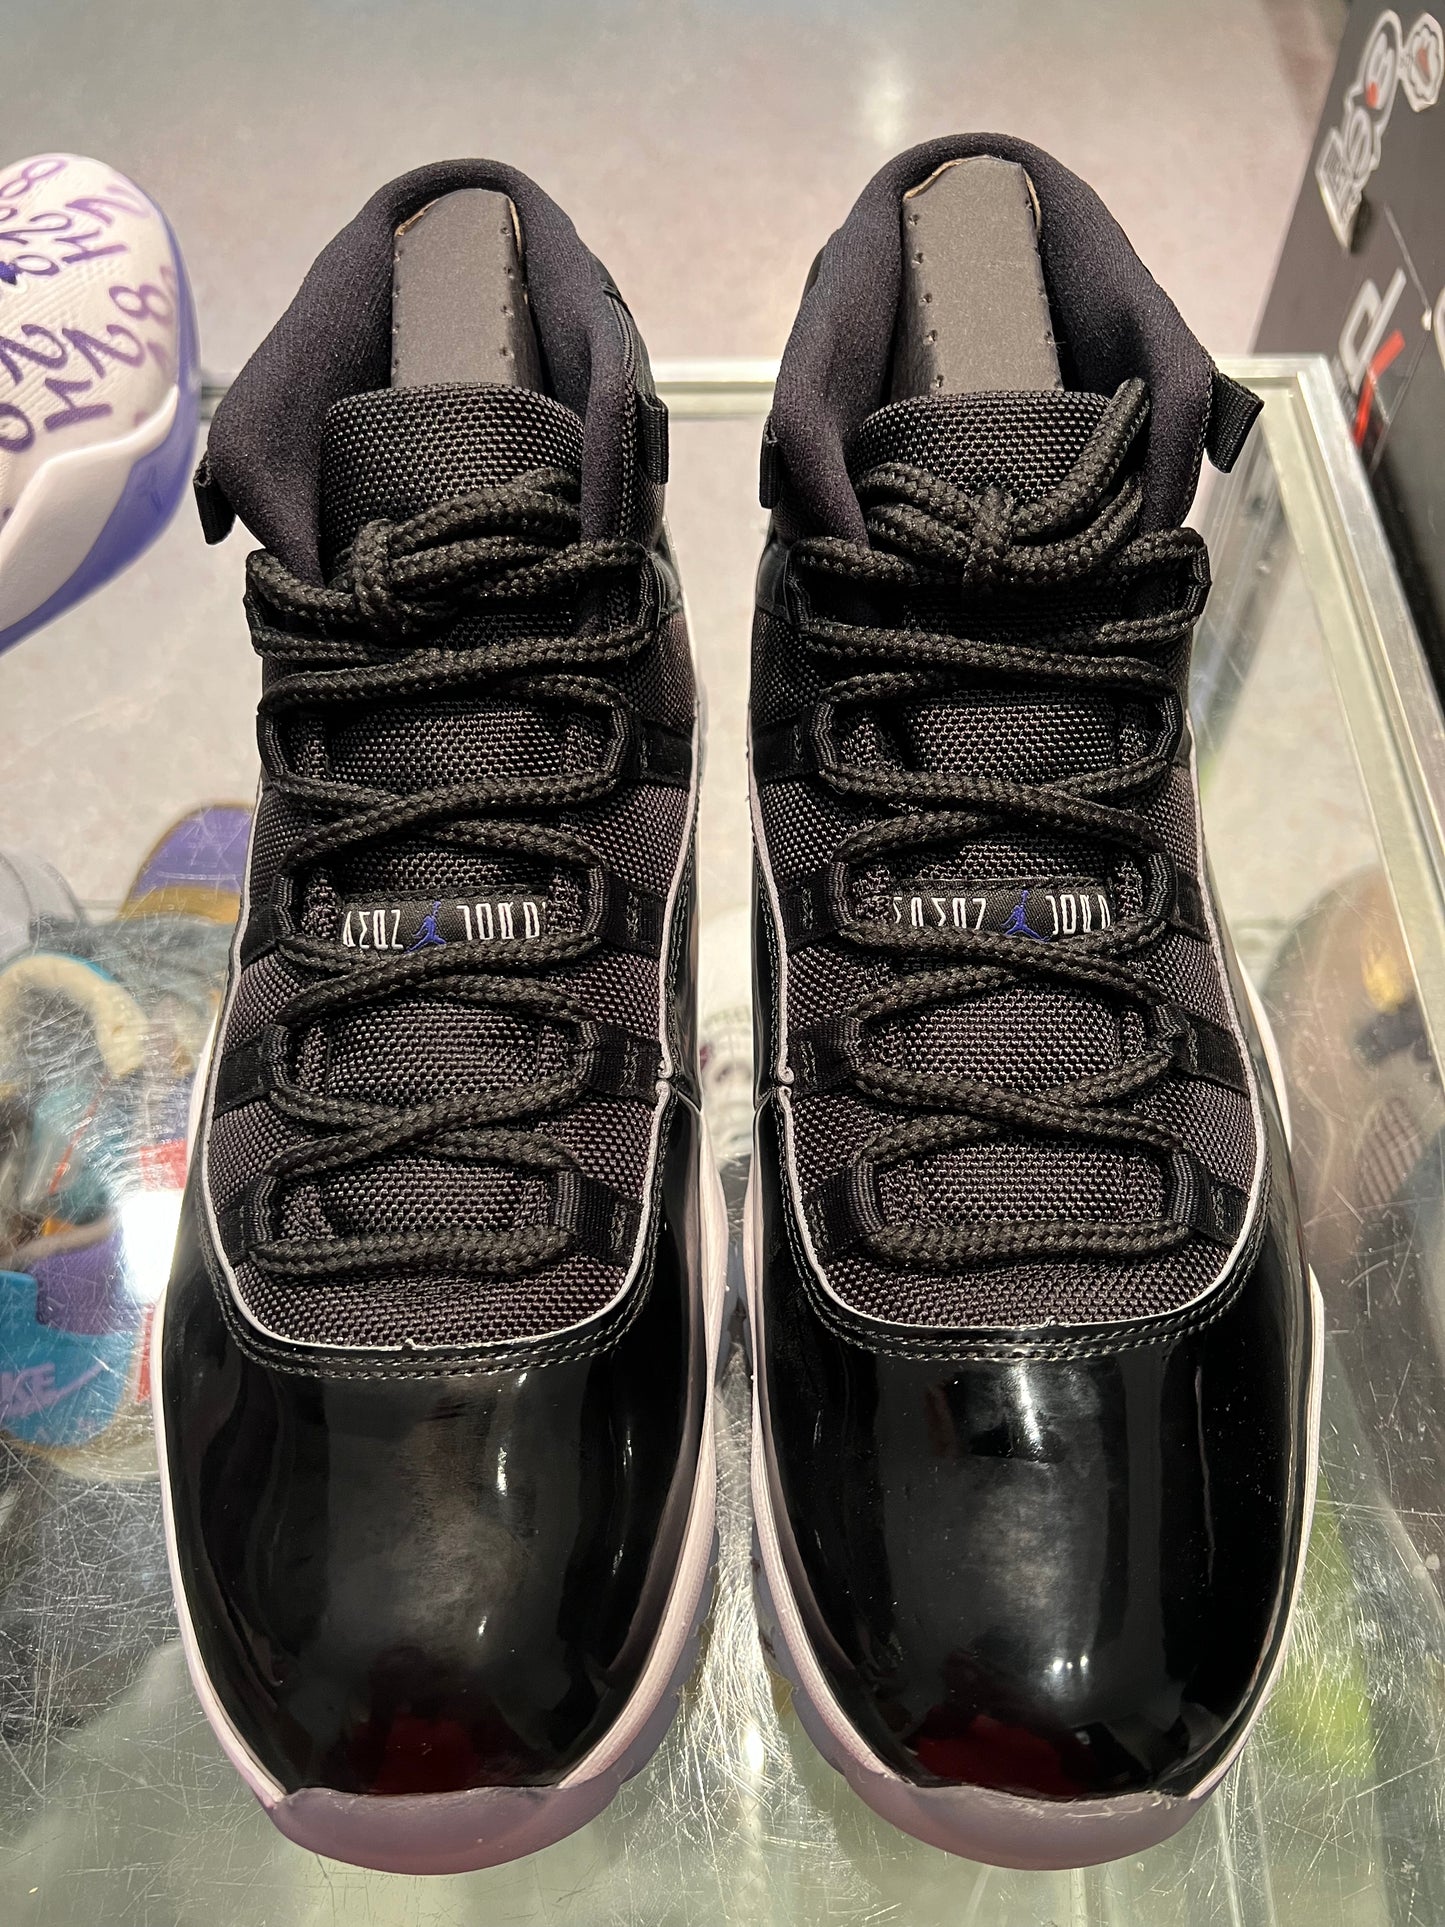 Size 10.5 Air Jordan 11 "Space Jam" Brand New (Mall)